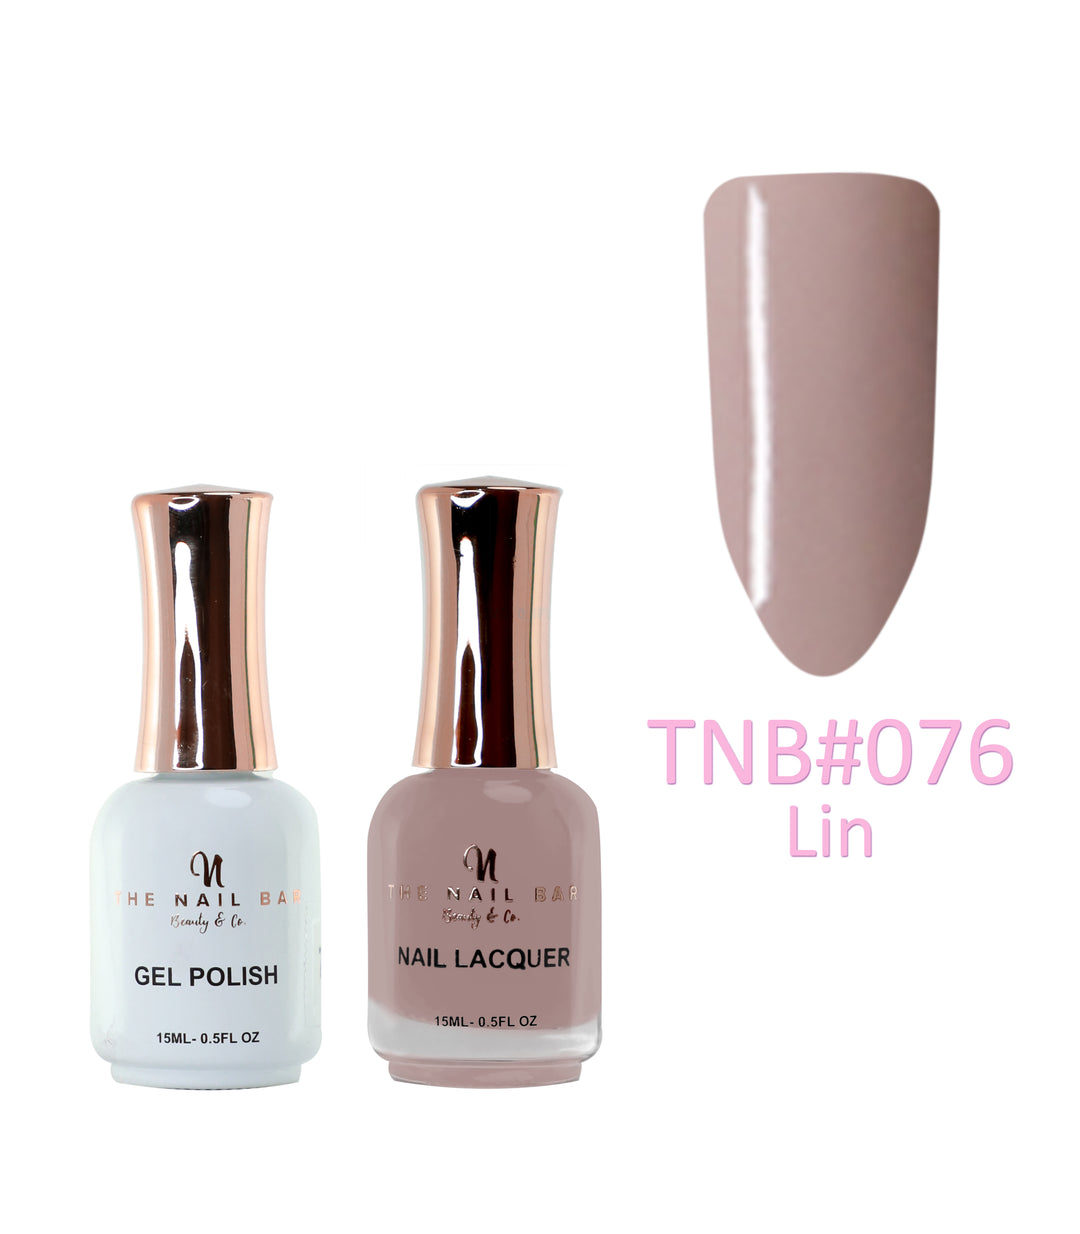 Dual Polish/Gel colour matching (15ml) - Lin - The Nail Bar Beauty & Co.